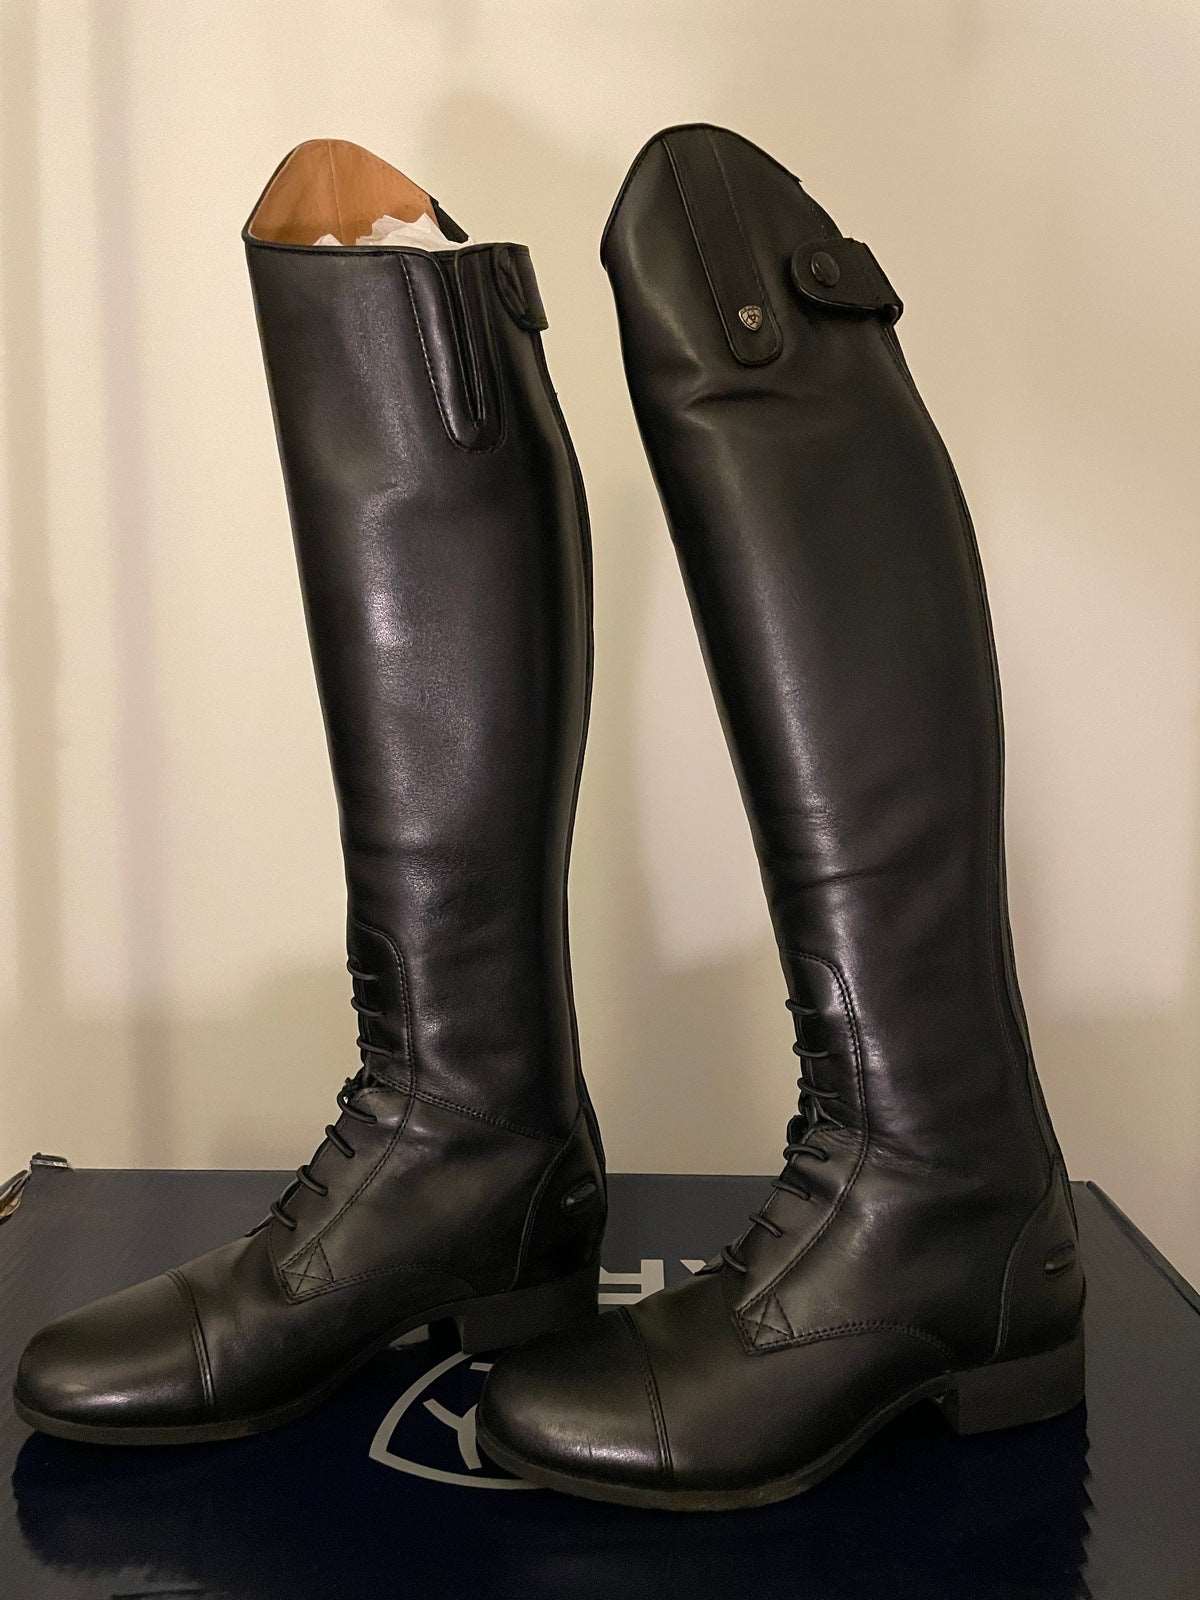 ThriftedEquestrian Clothing 7.5 XSM Ariat Heritage Field Boots - 7.5 Extra Slim Regular